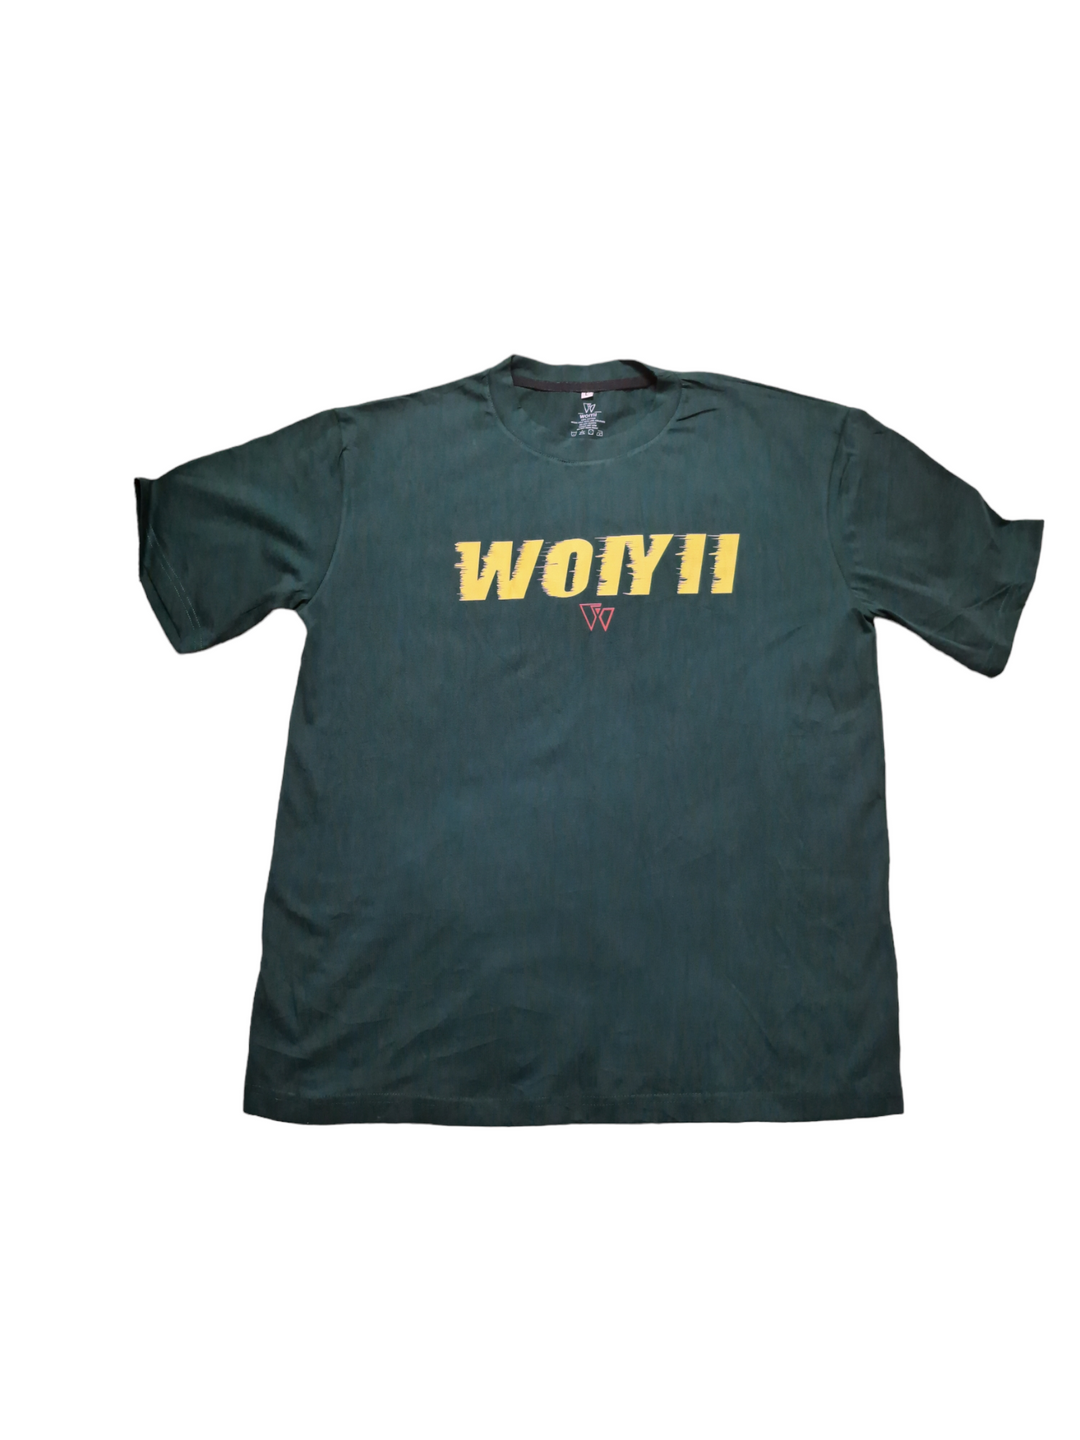 Woiyii Green T-Shirt